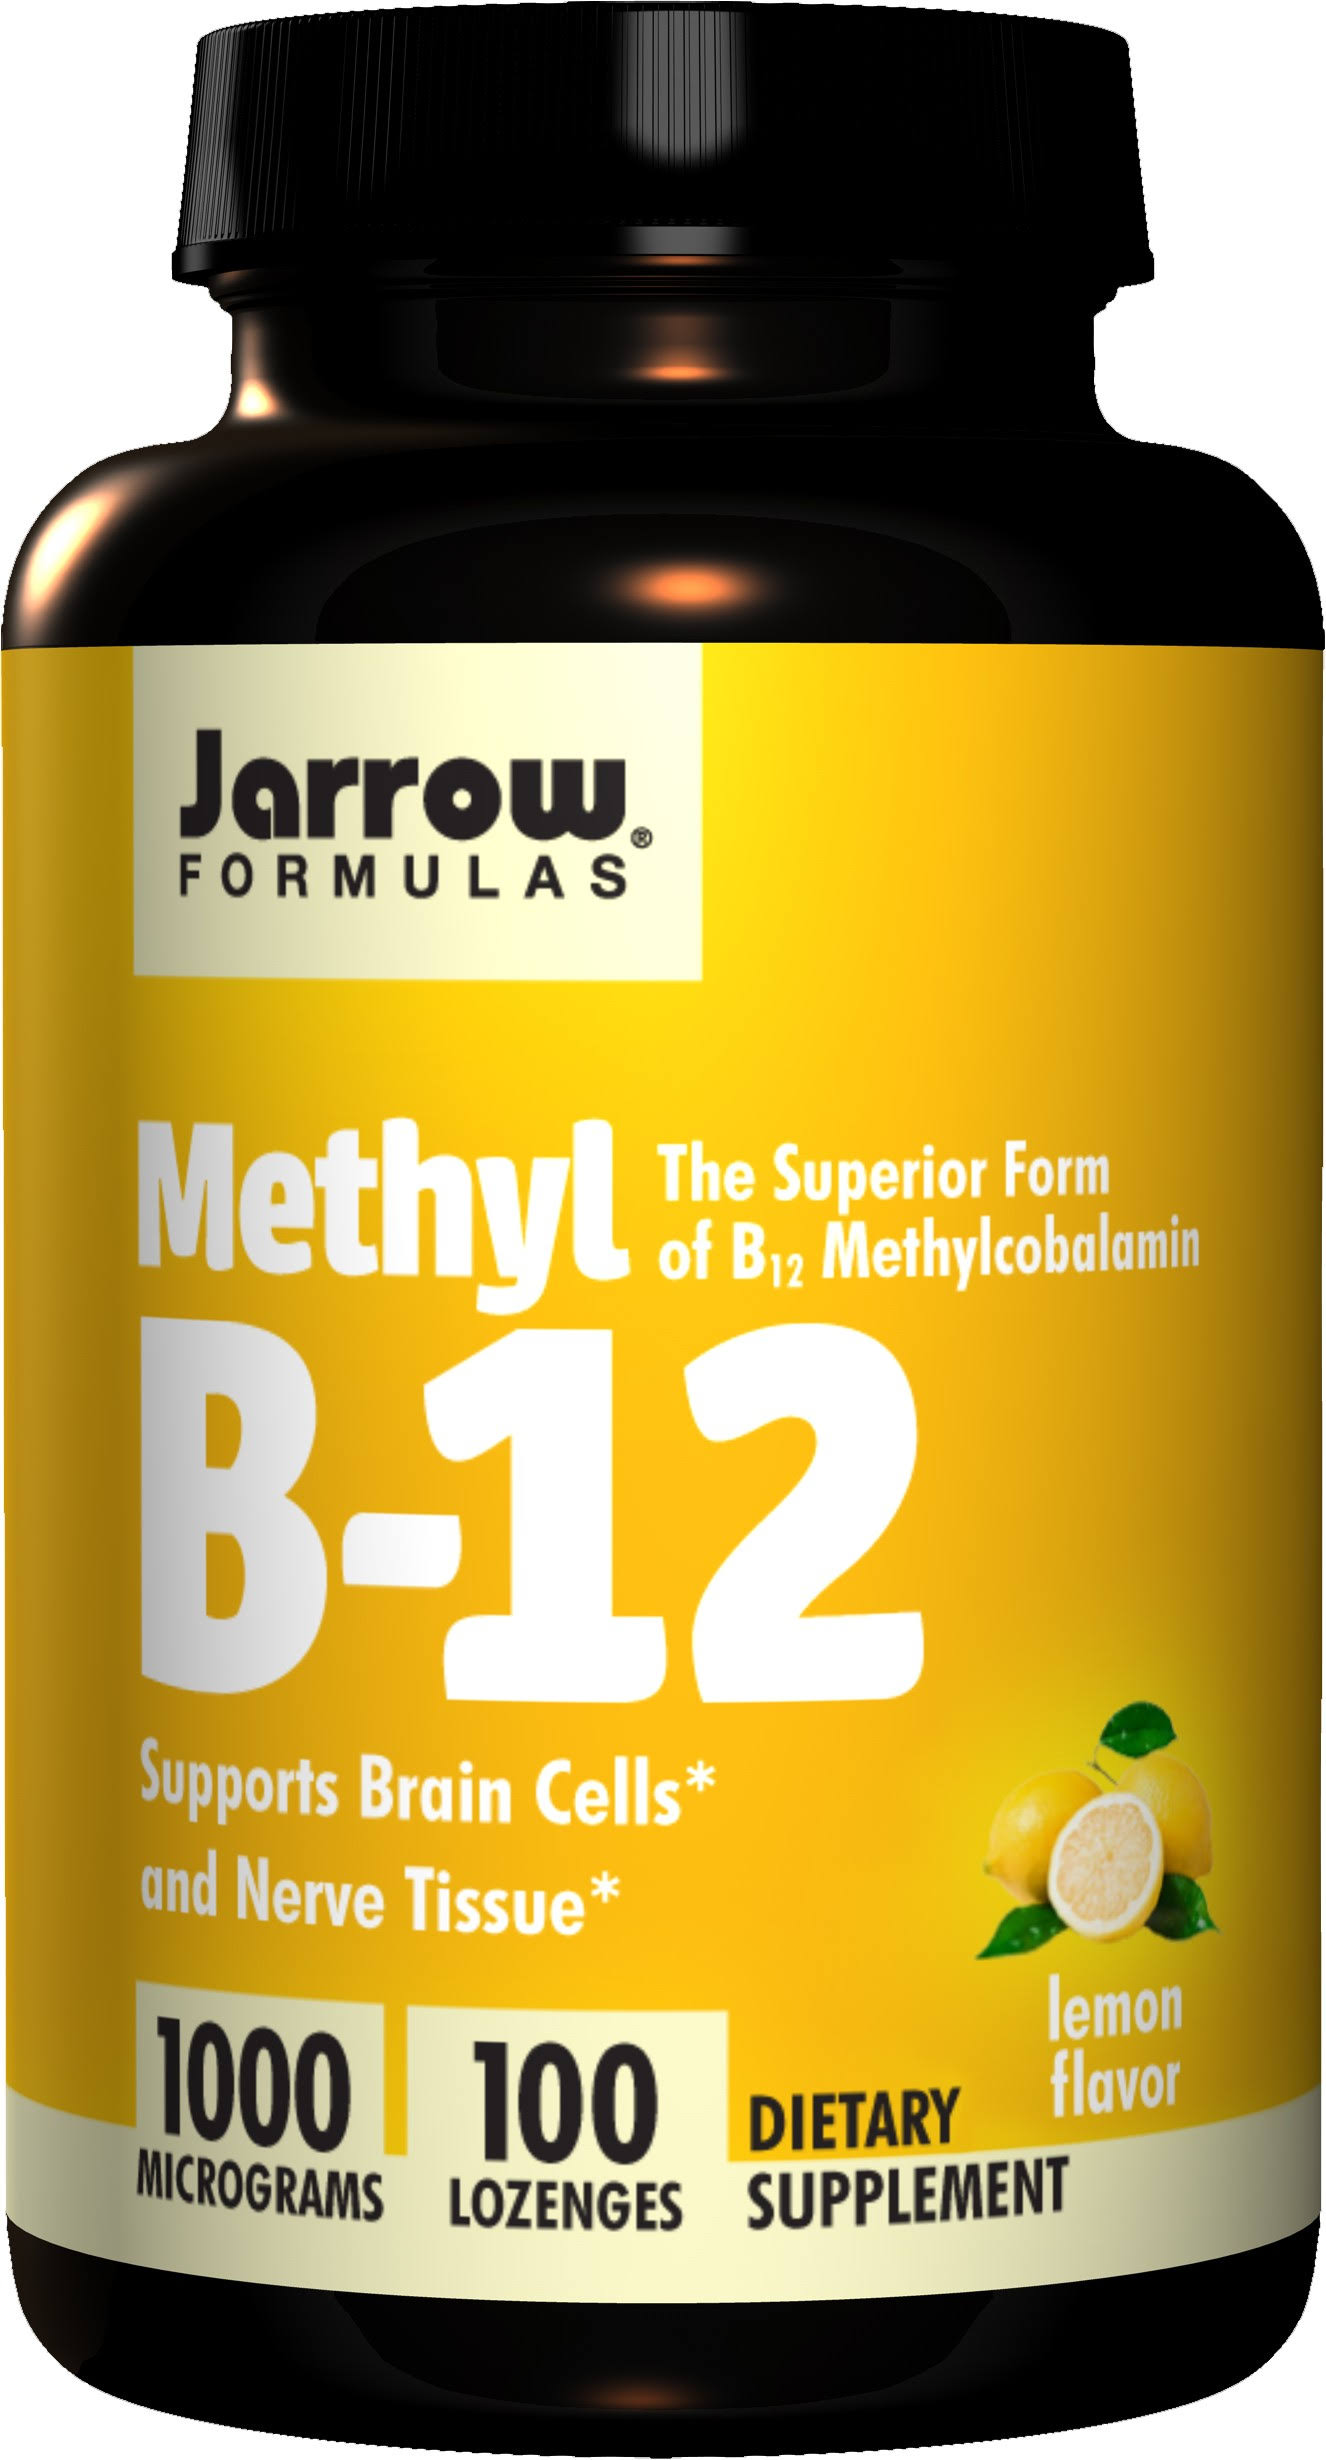 Jarrow Formulas Methyl B-12 Dietary Supplement - 1000mcg, 100 Lozenges